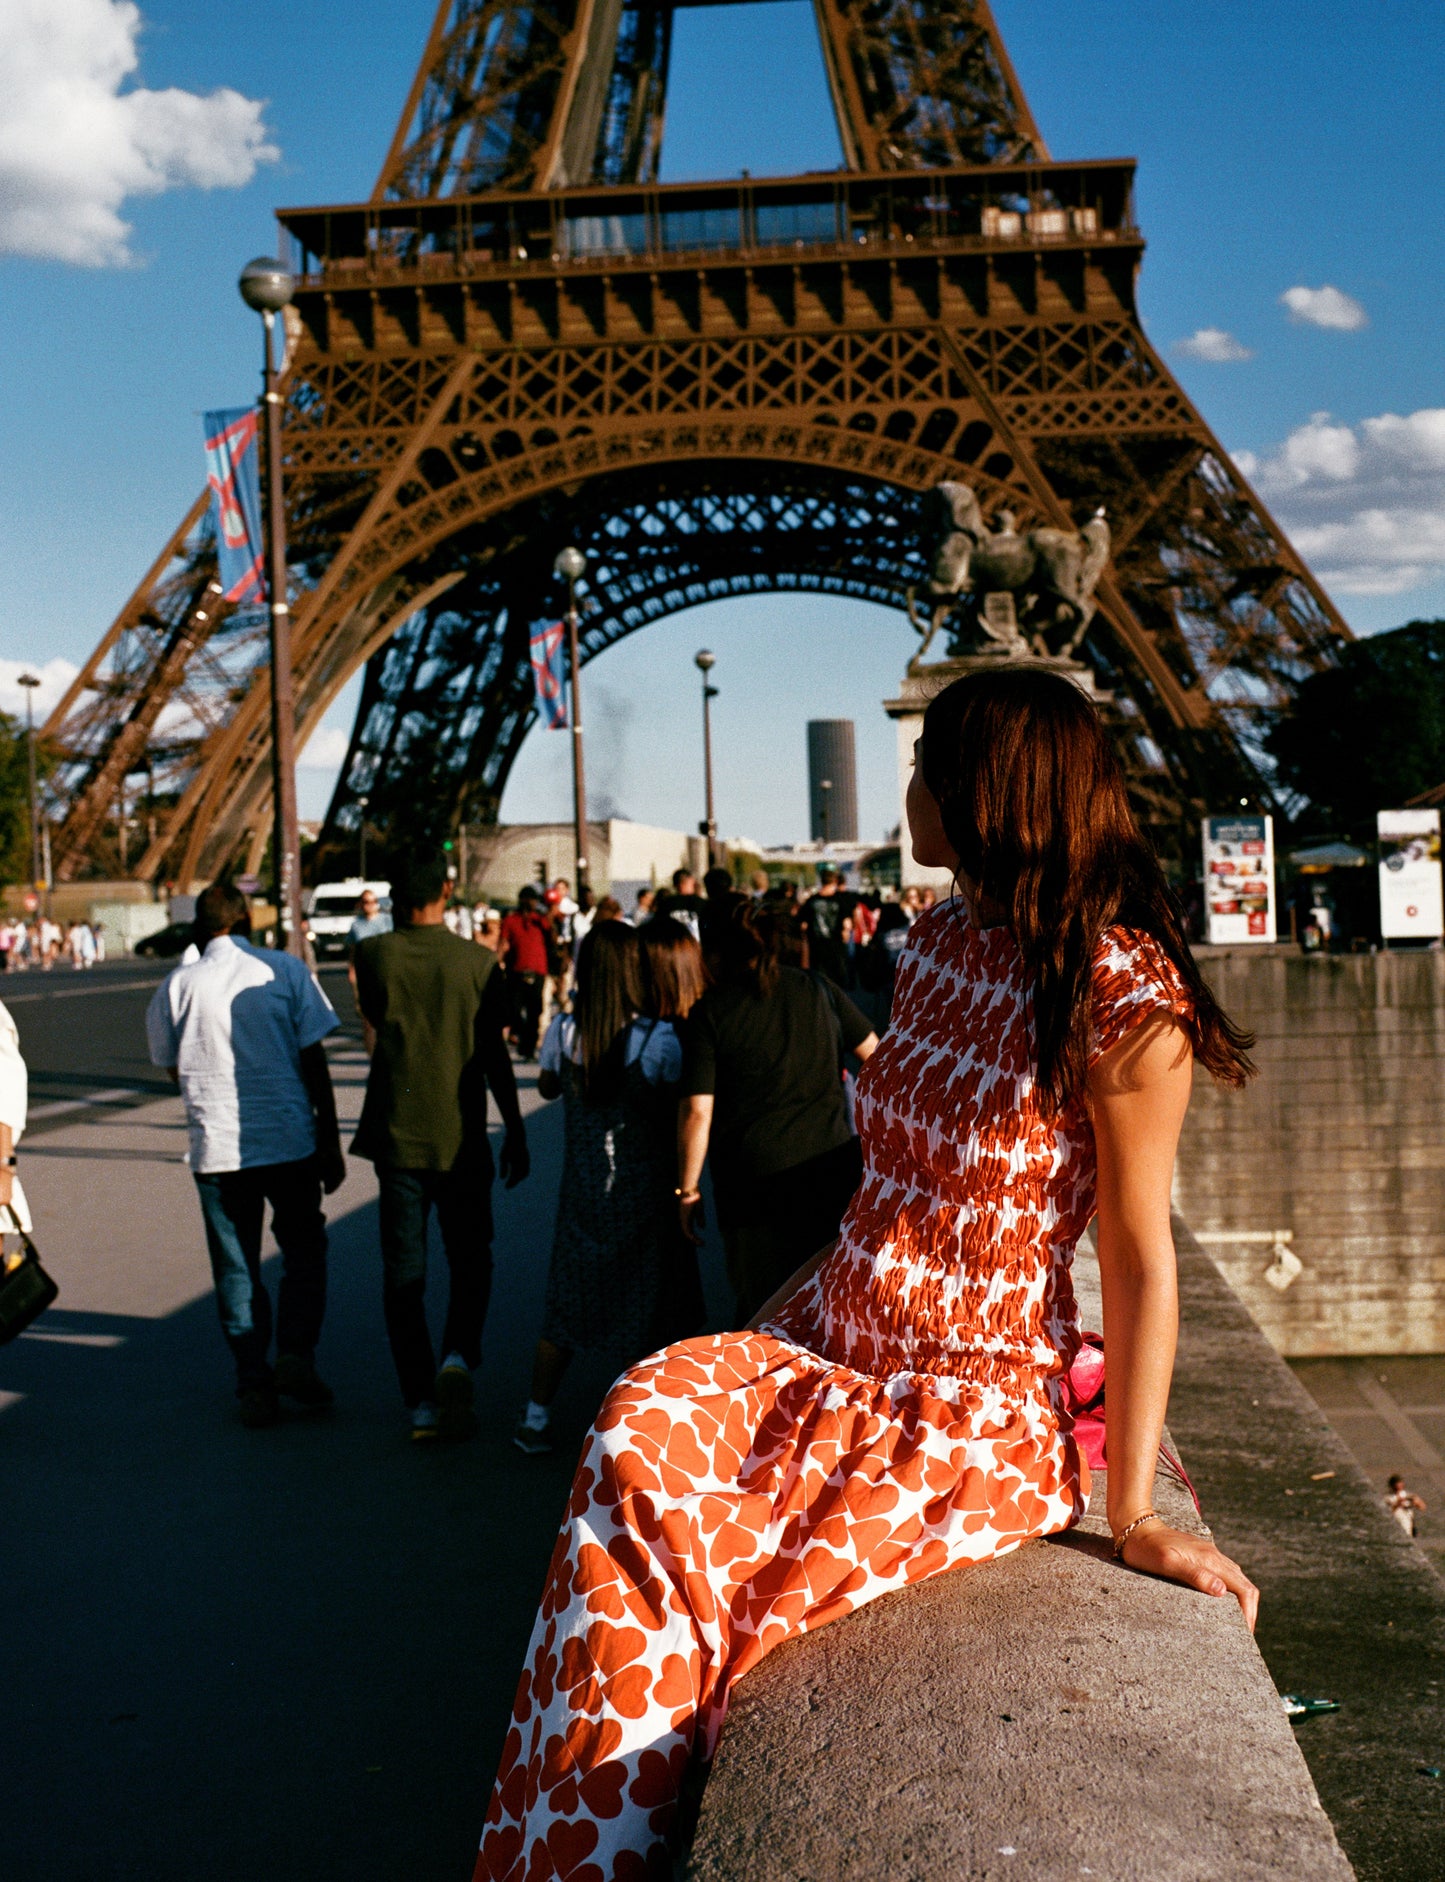 The PARIS dress